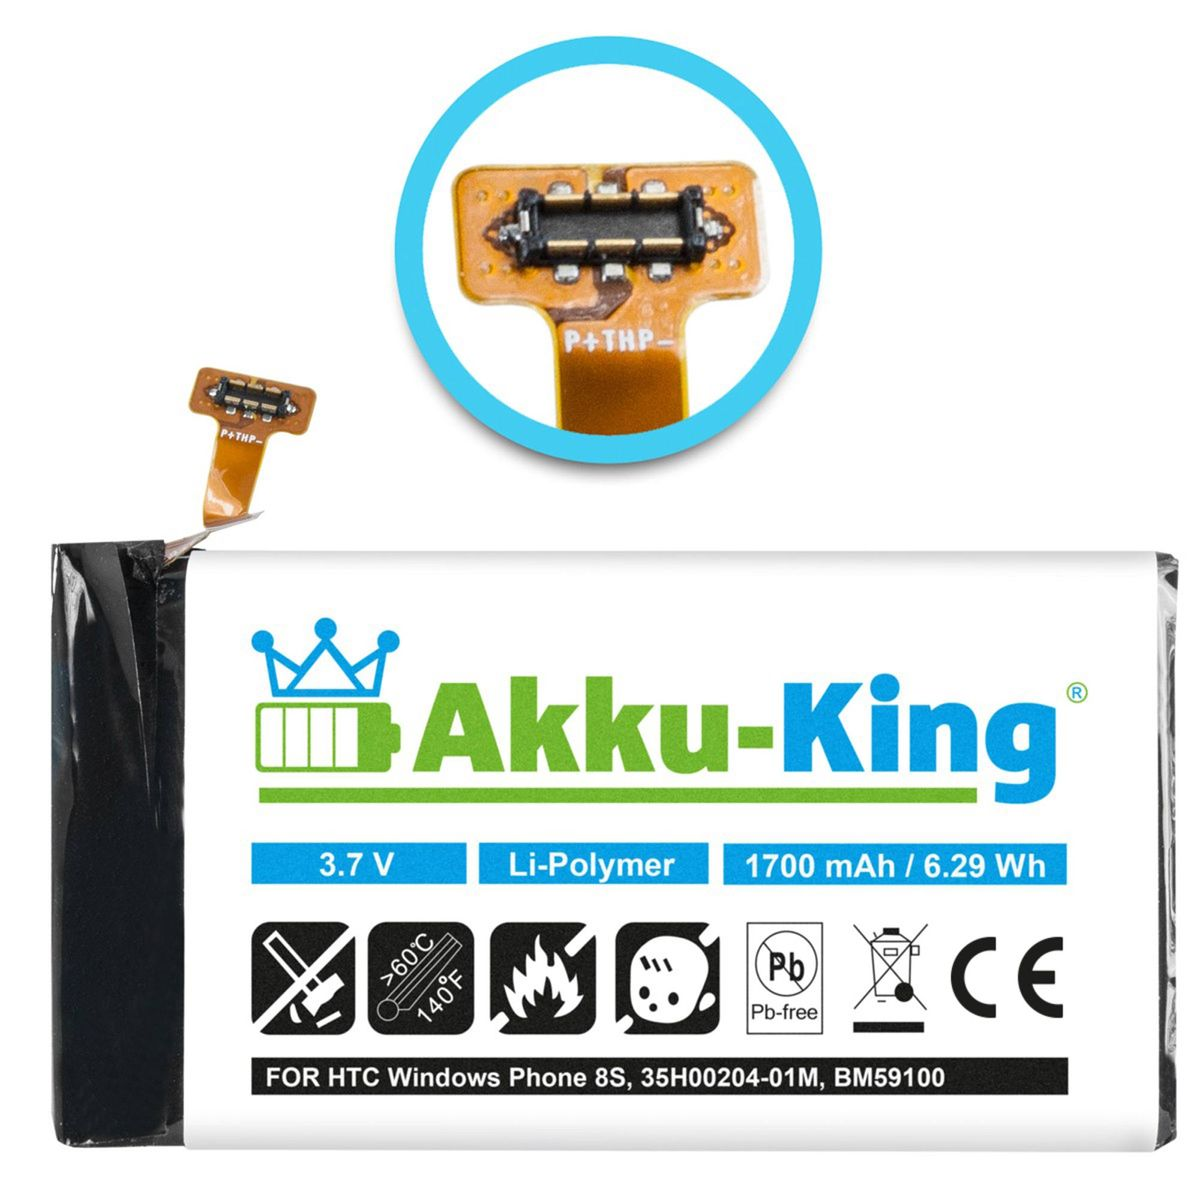 mit kompatibel Handy-Akku, HTC 3.7 AKKU-KING Volt, 35H00204-01M 1700mAh Akku Li-Polymer